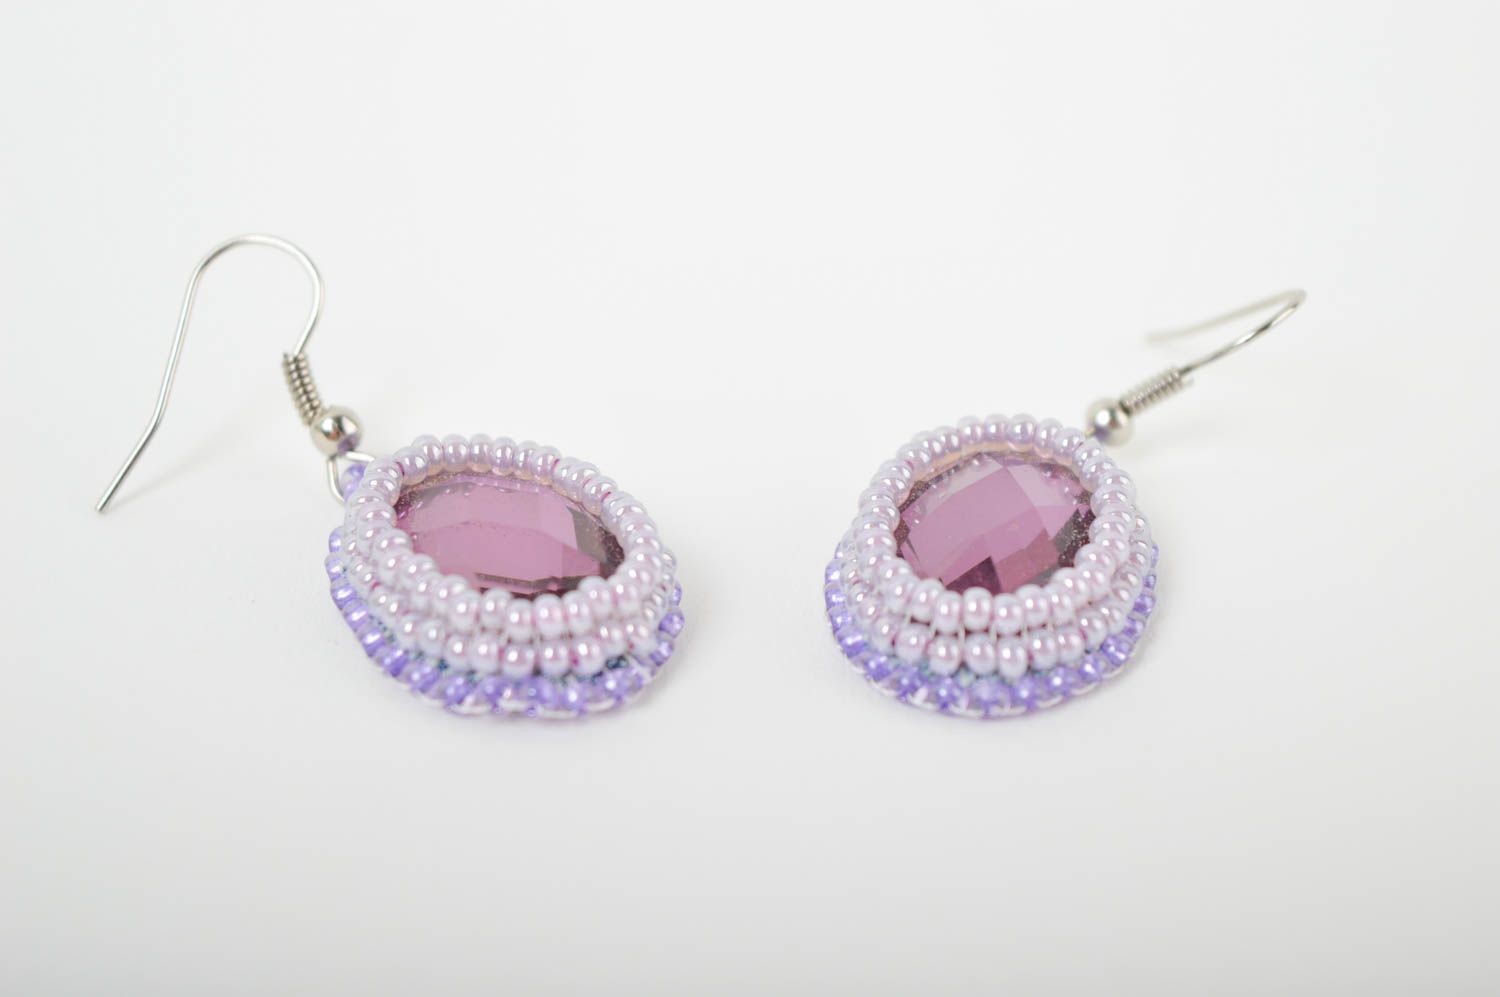 Small handmade beaded earrings glass cabochon earrings cool jewelry designs photo 5